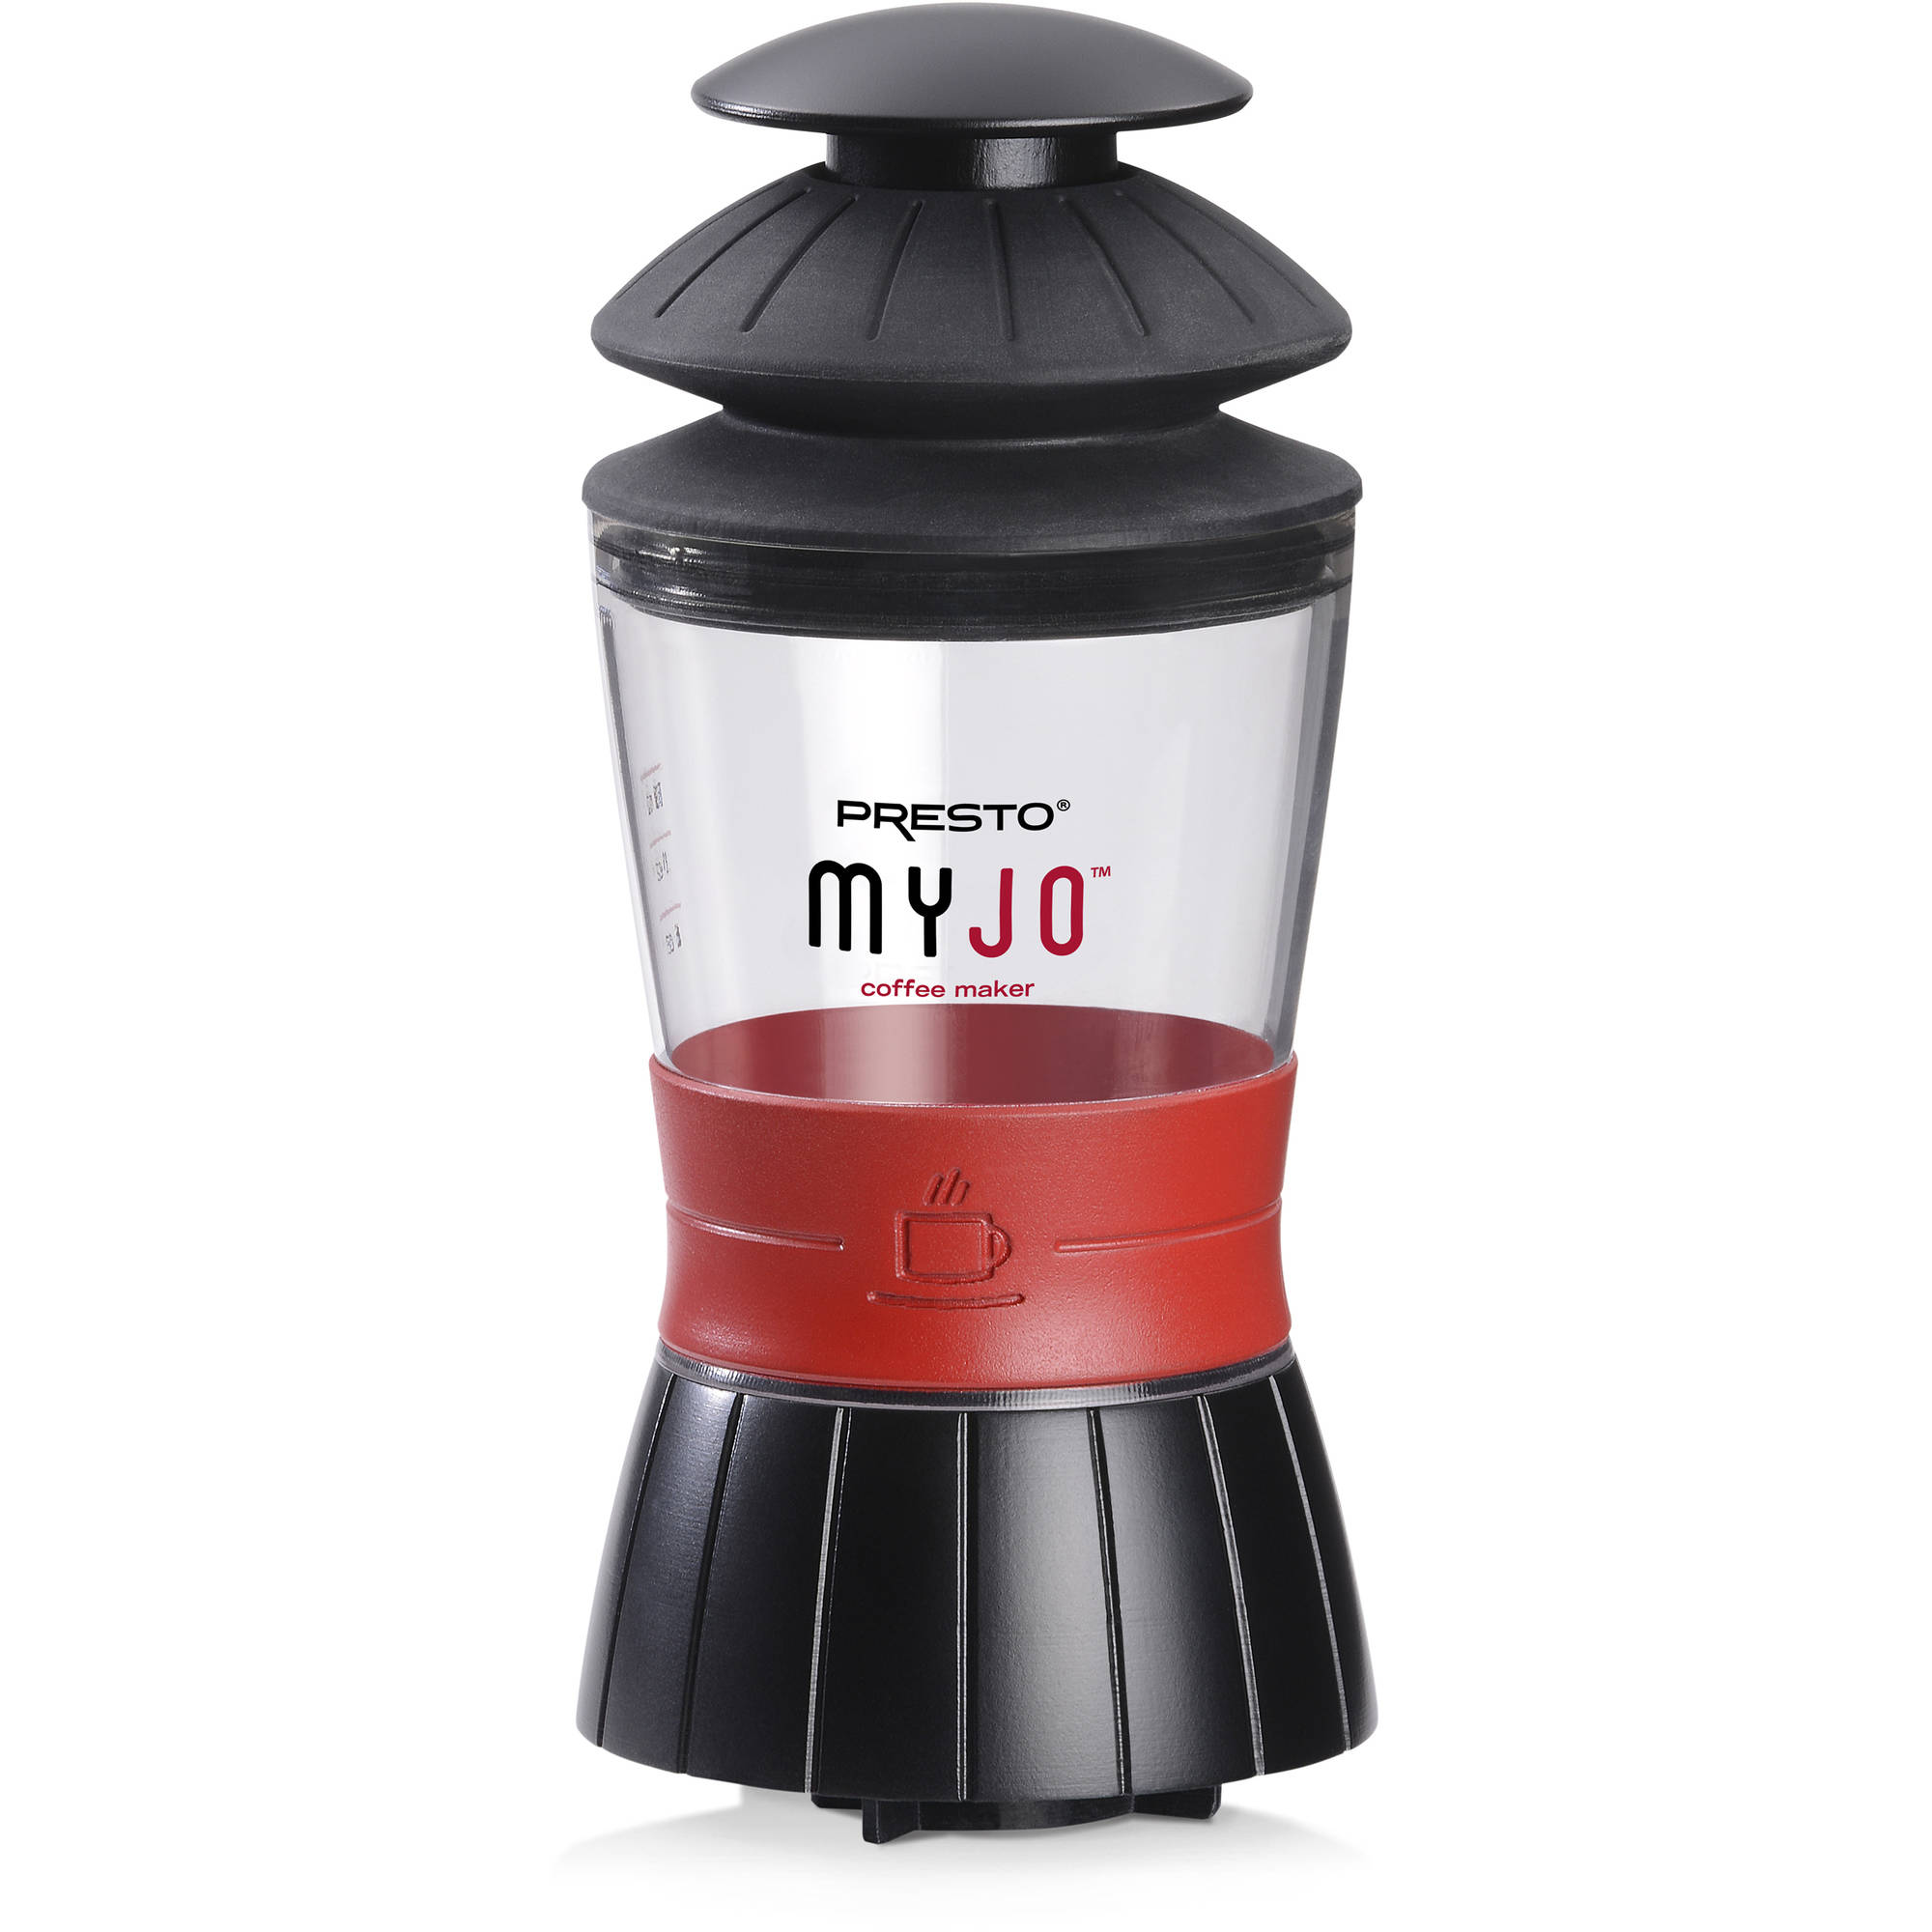 Presto MyJo Single Cup Coffee Maker, Red 02835 - image 2 of 5